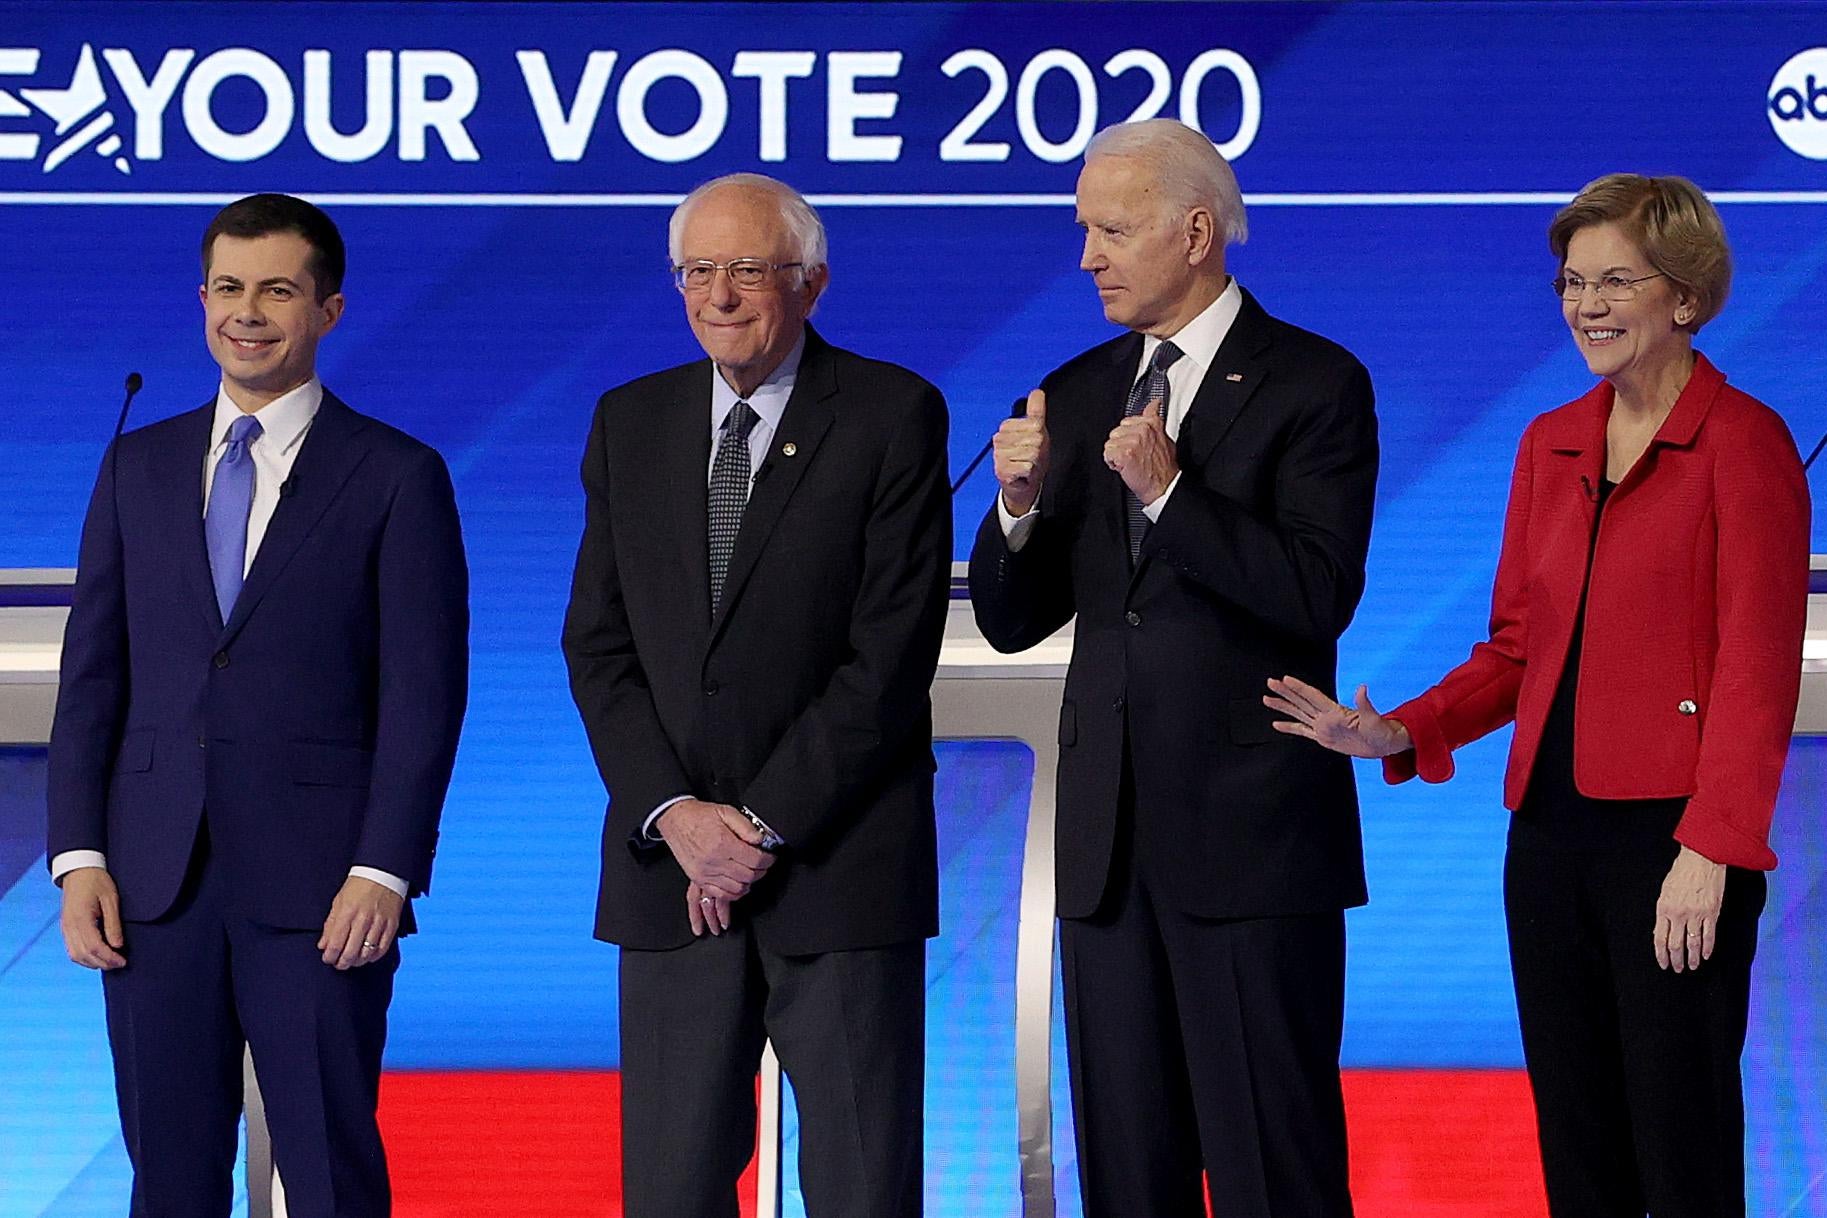 Pete Buttigieg, Bernie Sanders, Joe Biden, and Elizabeth Warren stand in a row on the debate stage.